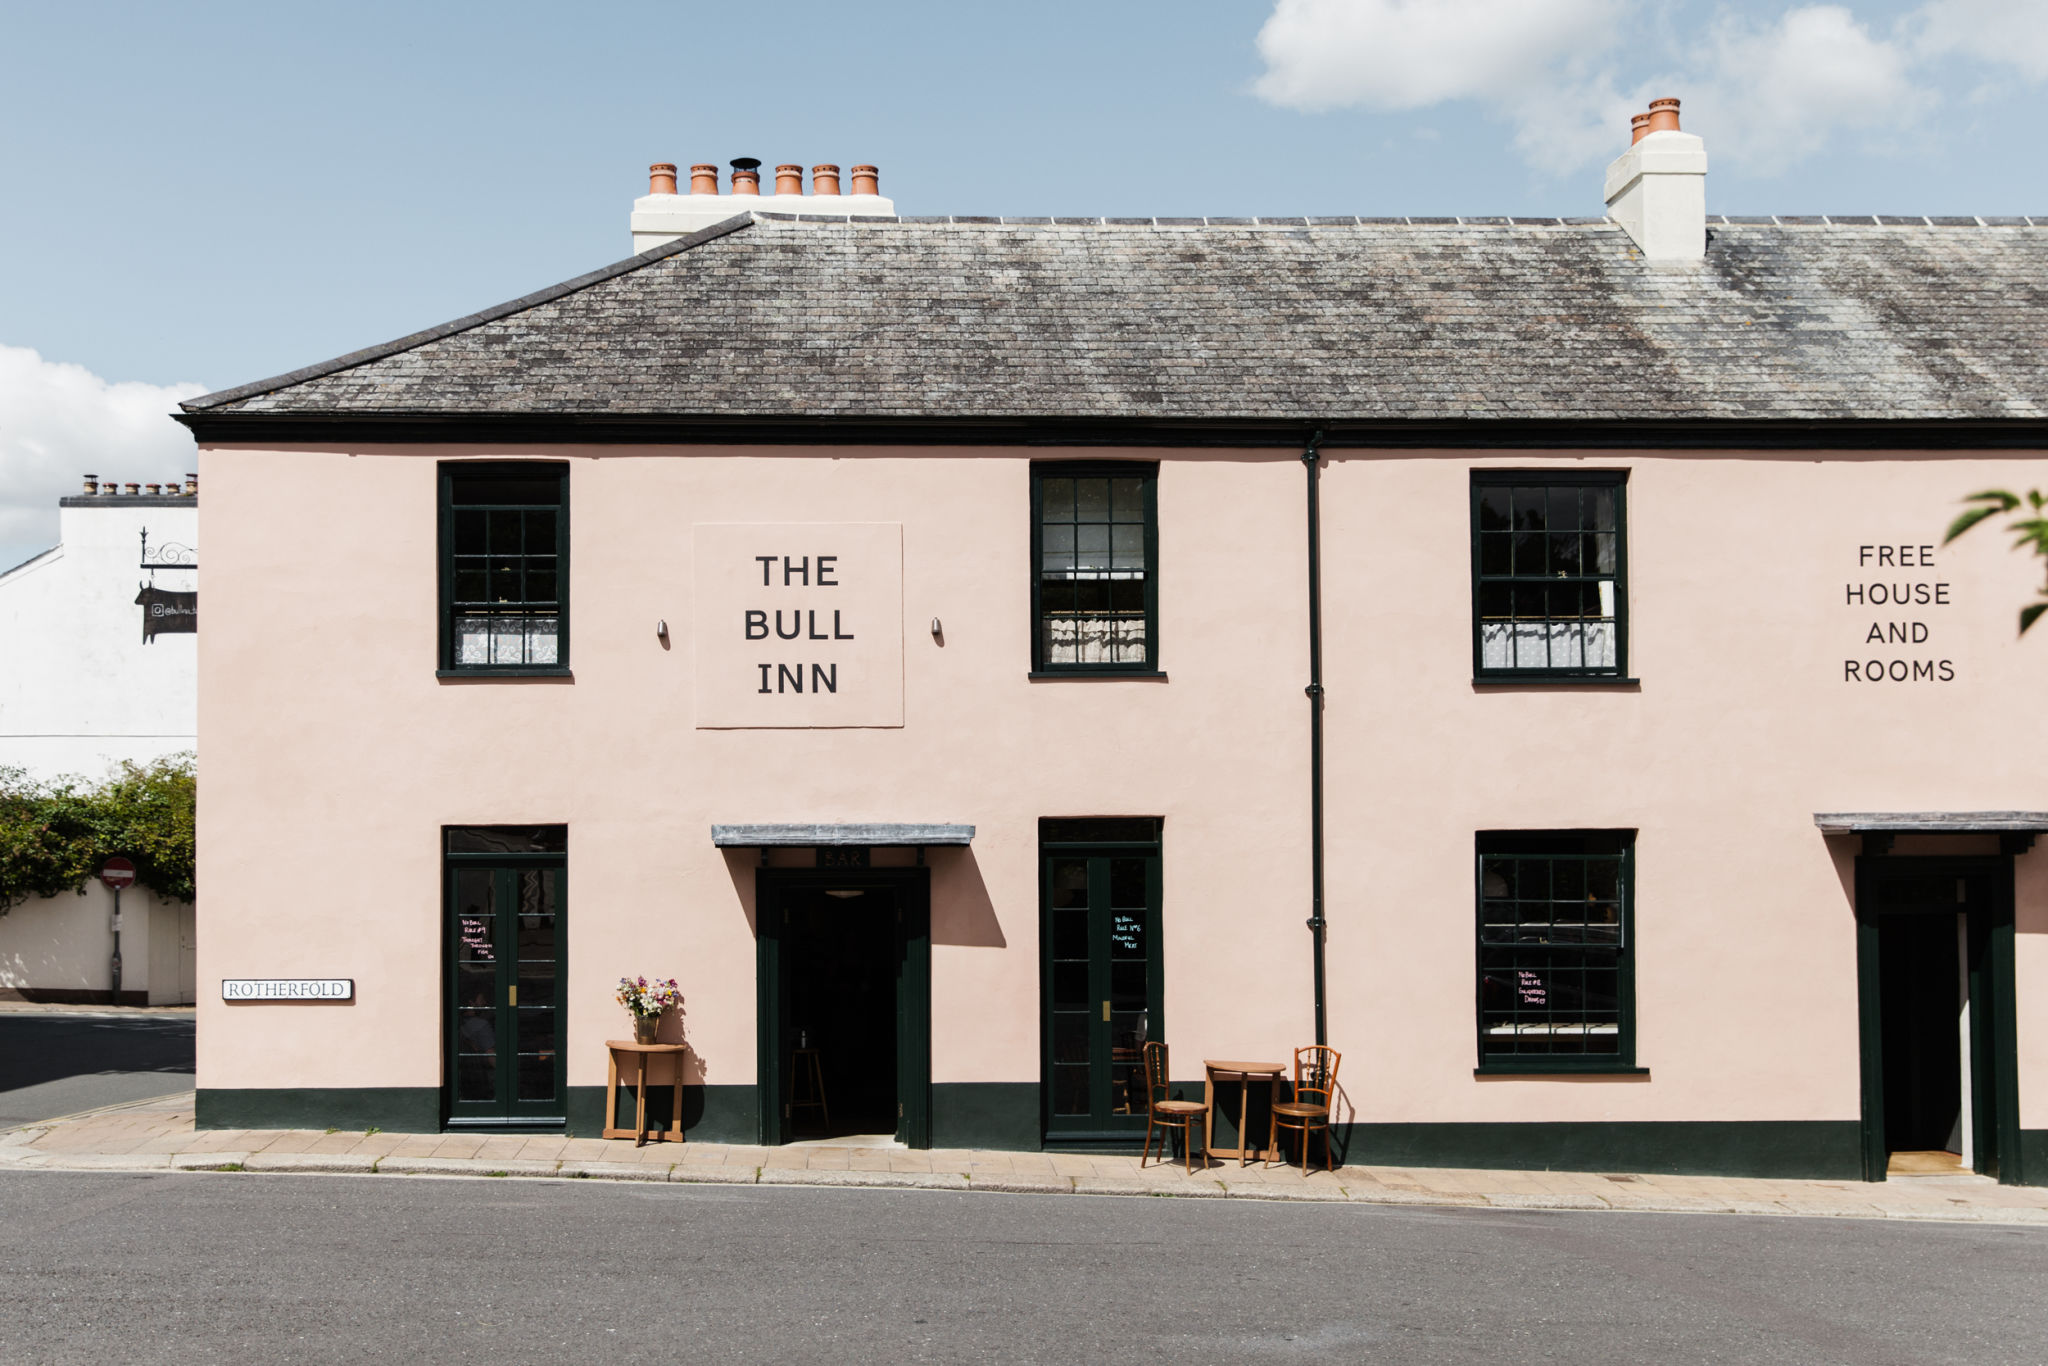 Radical, Ethical, Colorful: The Bull Inn in South Devon, England